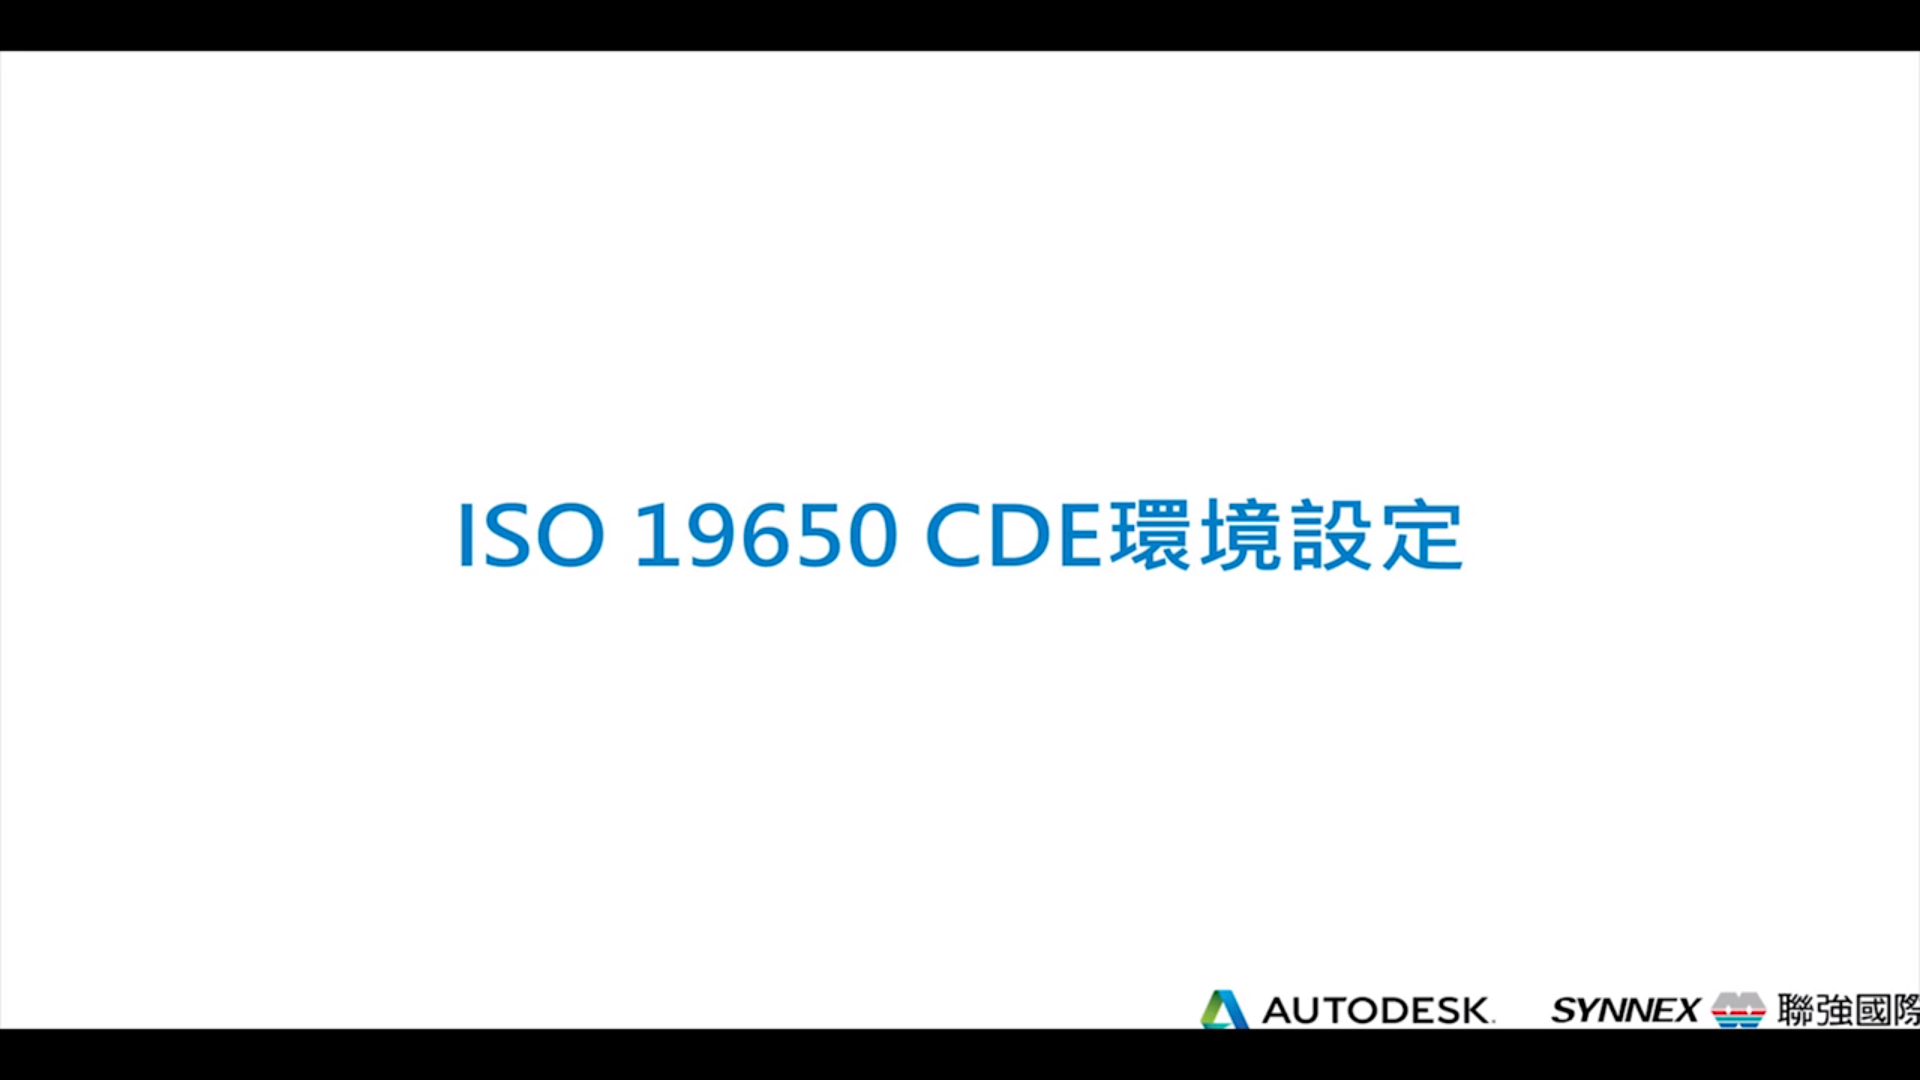 【Autodesk Construction Cloud】文件管理 (六) ISO19650